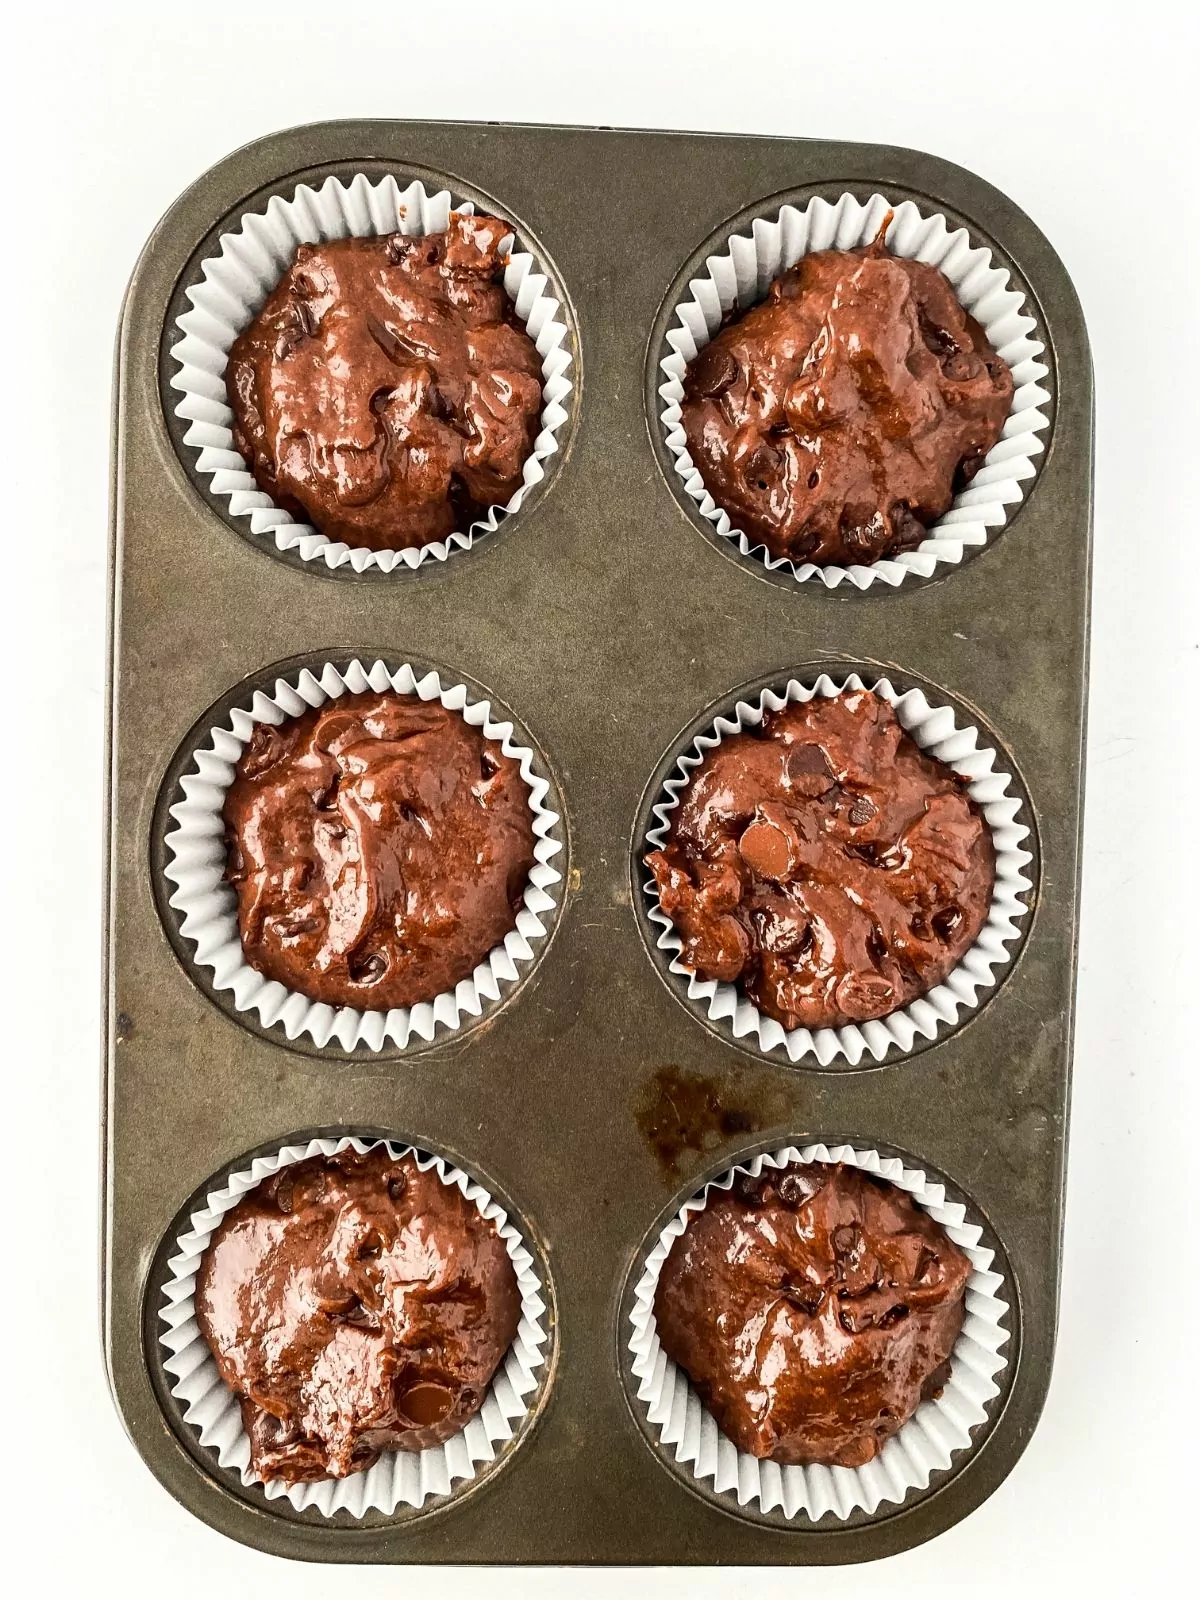 chocolate muffins.